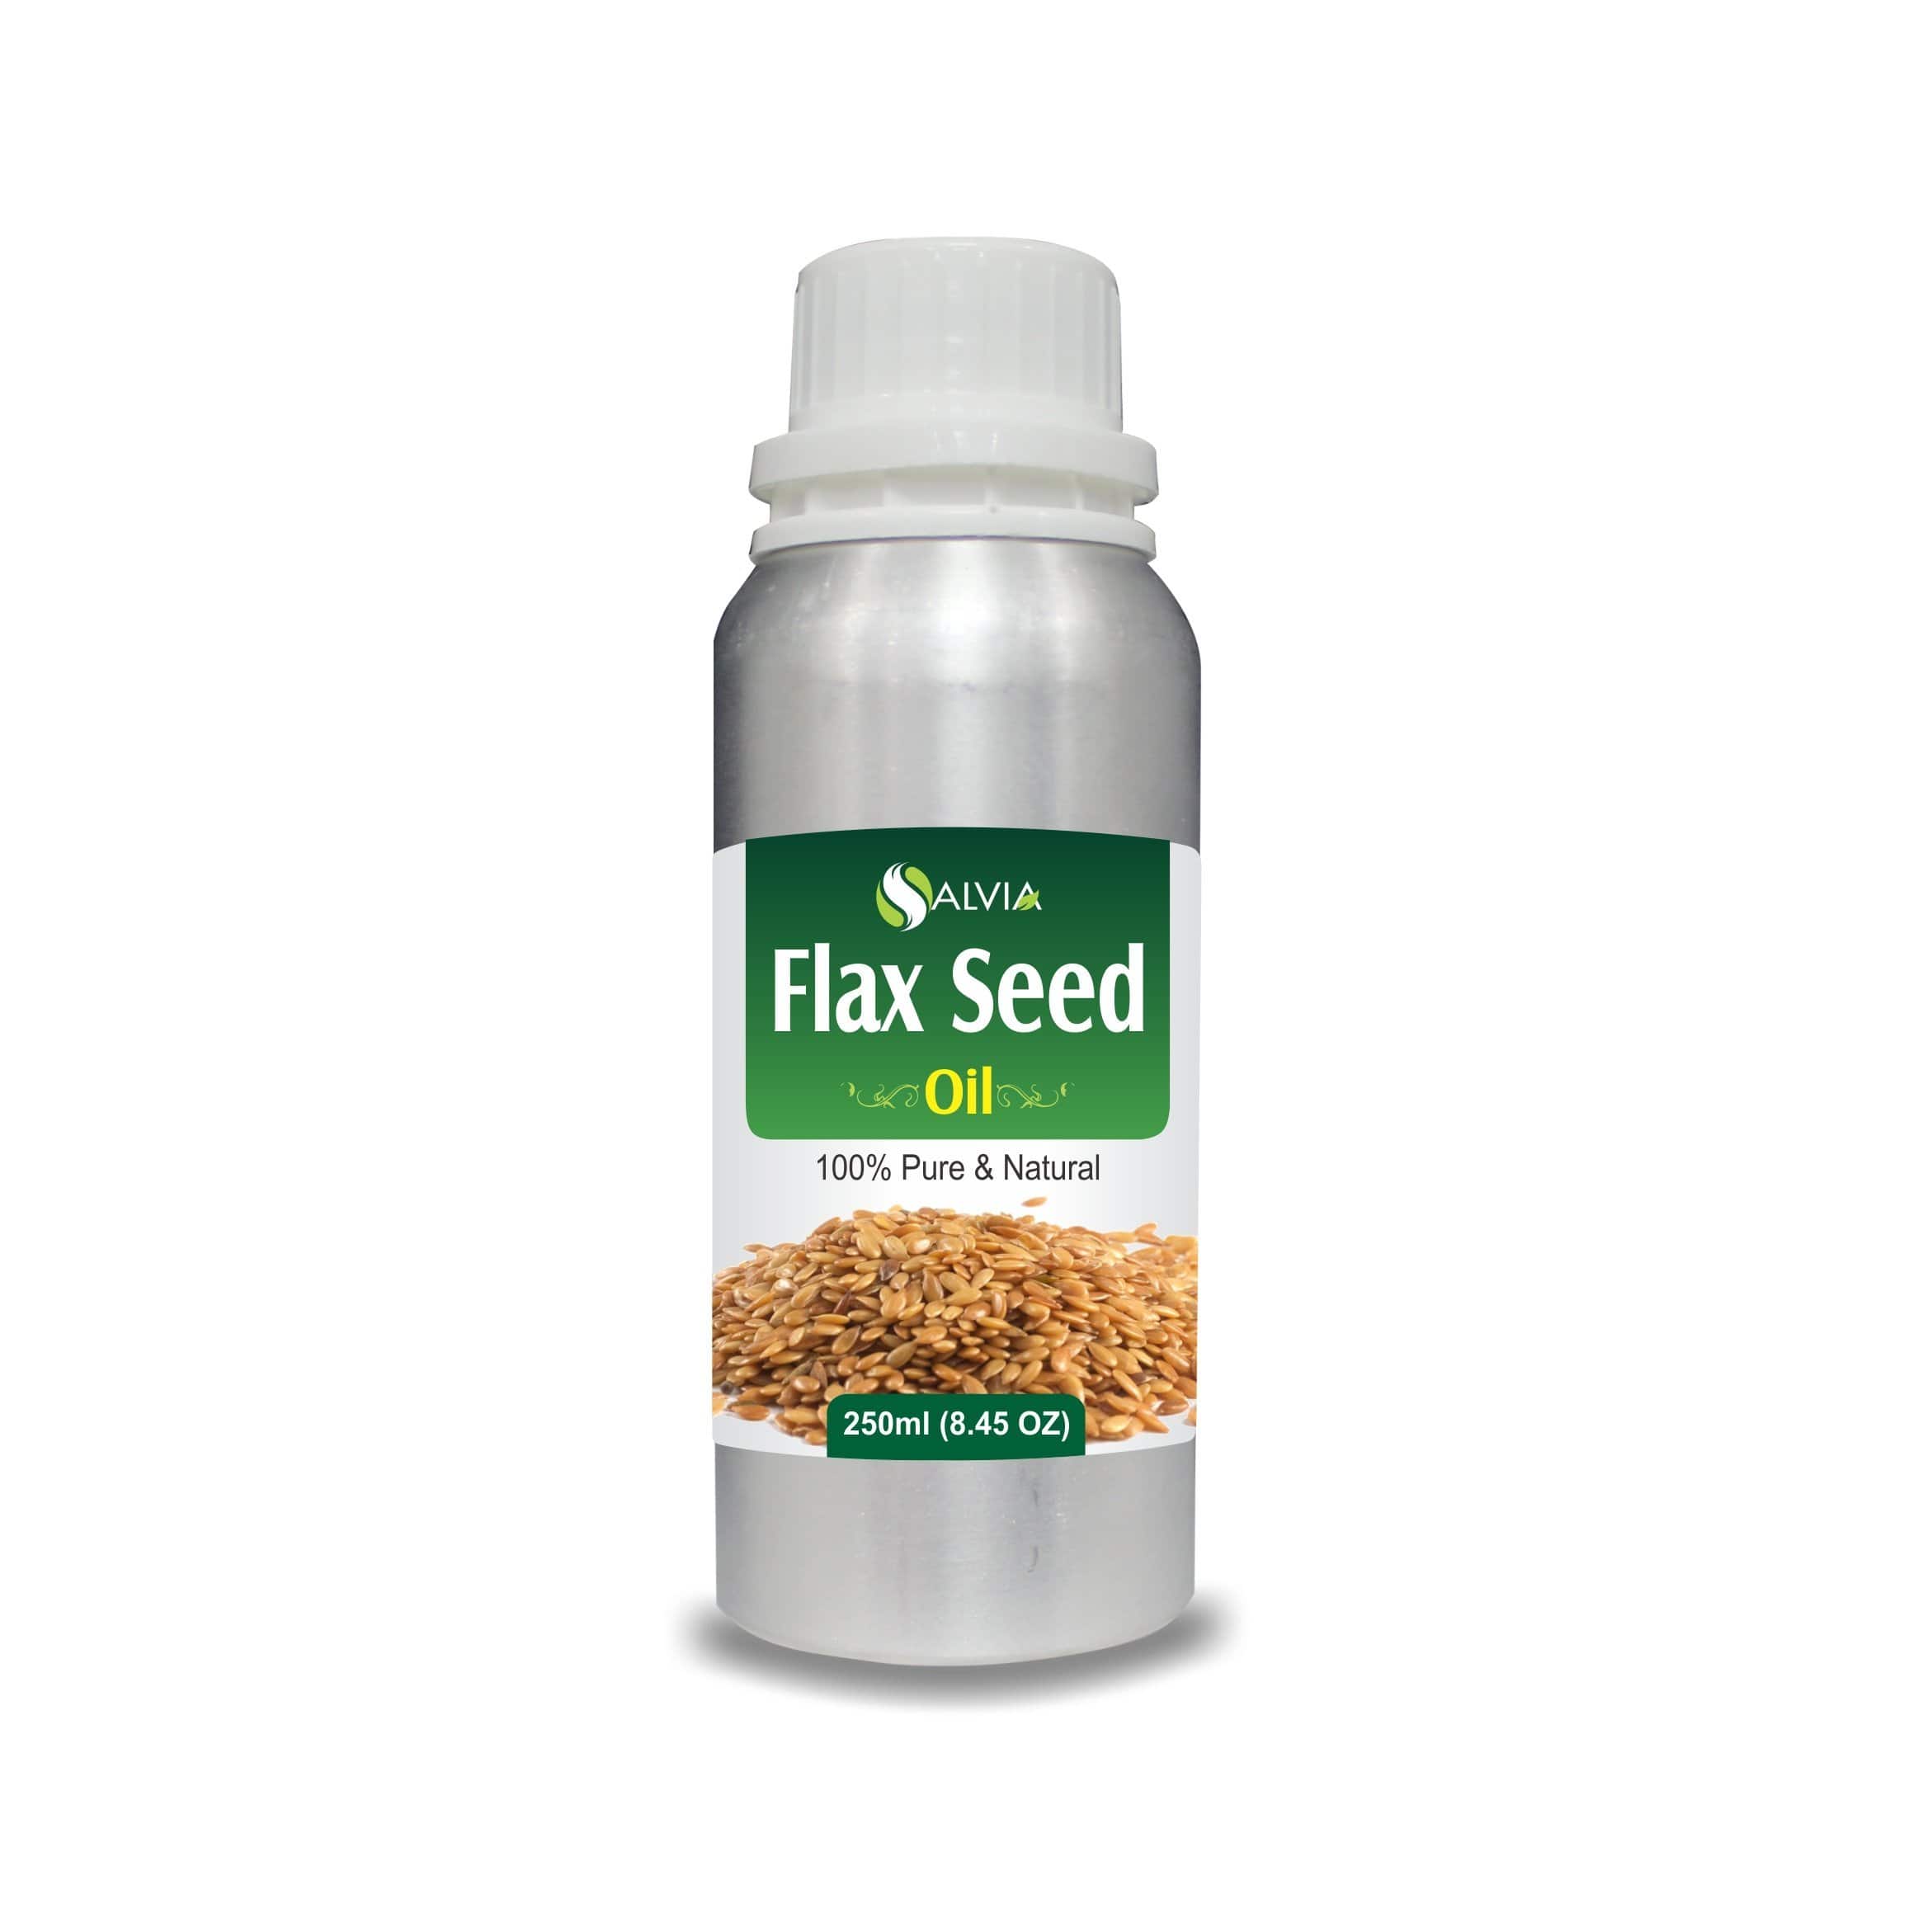 flax seeds benefits